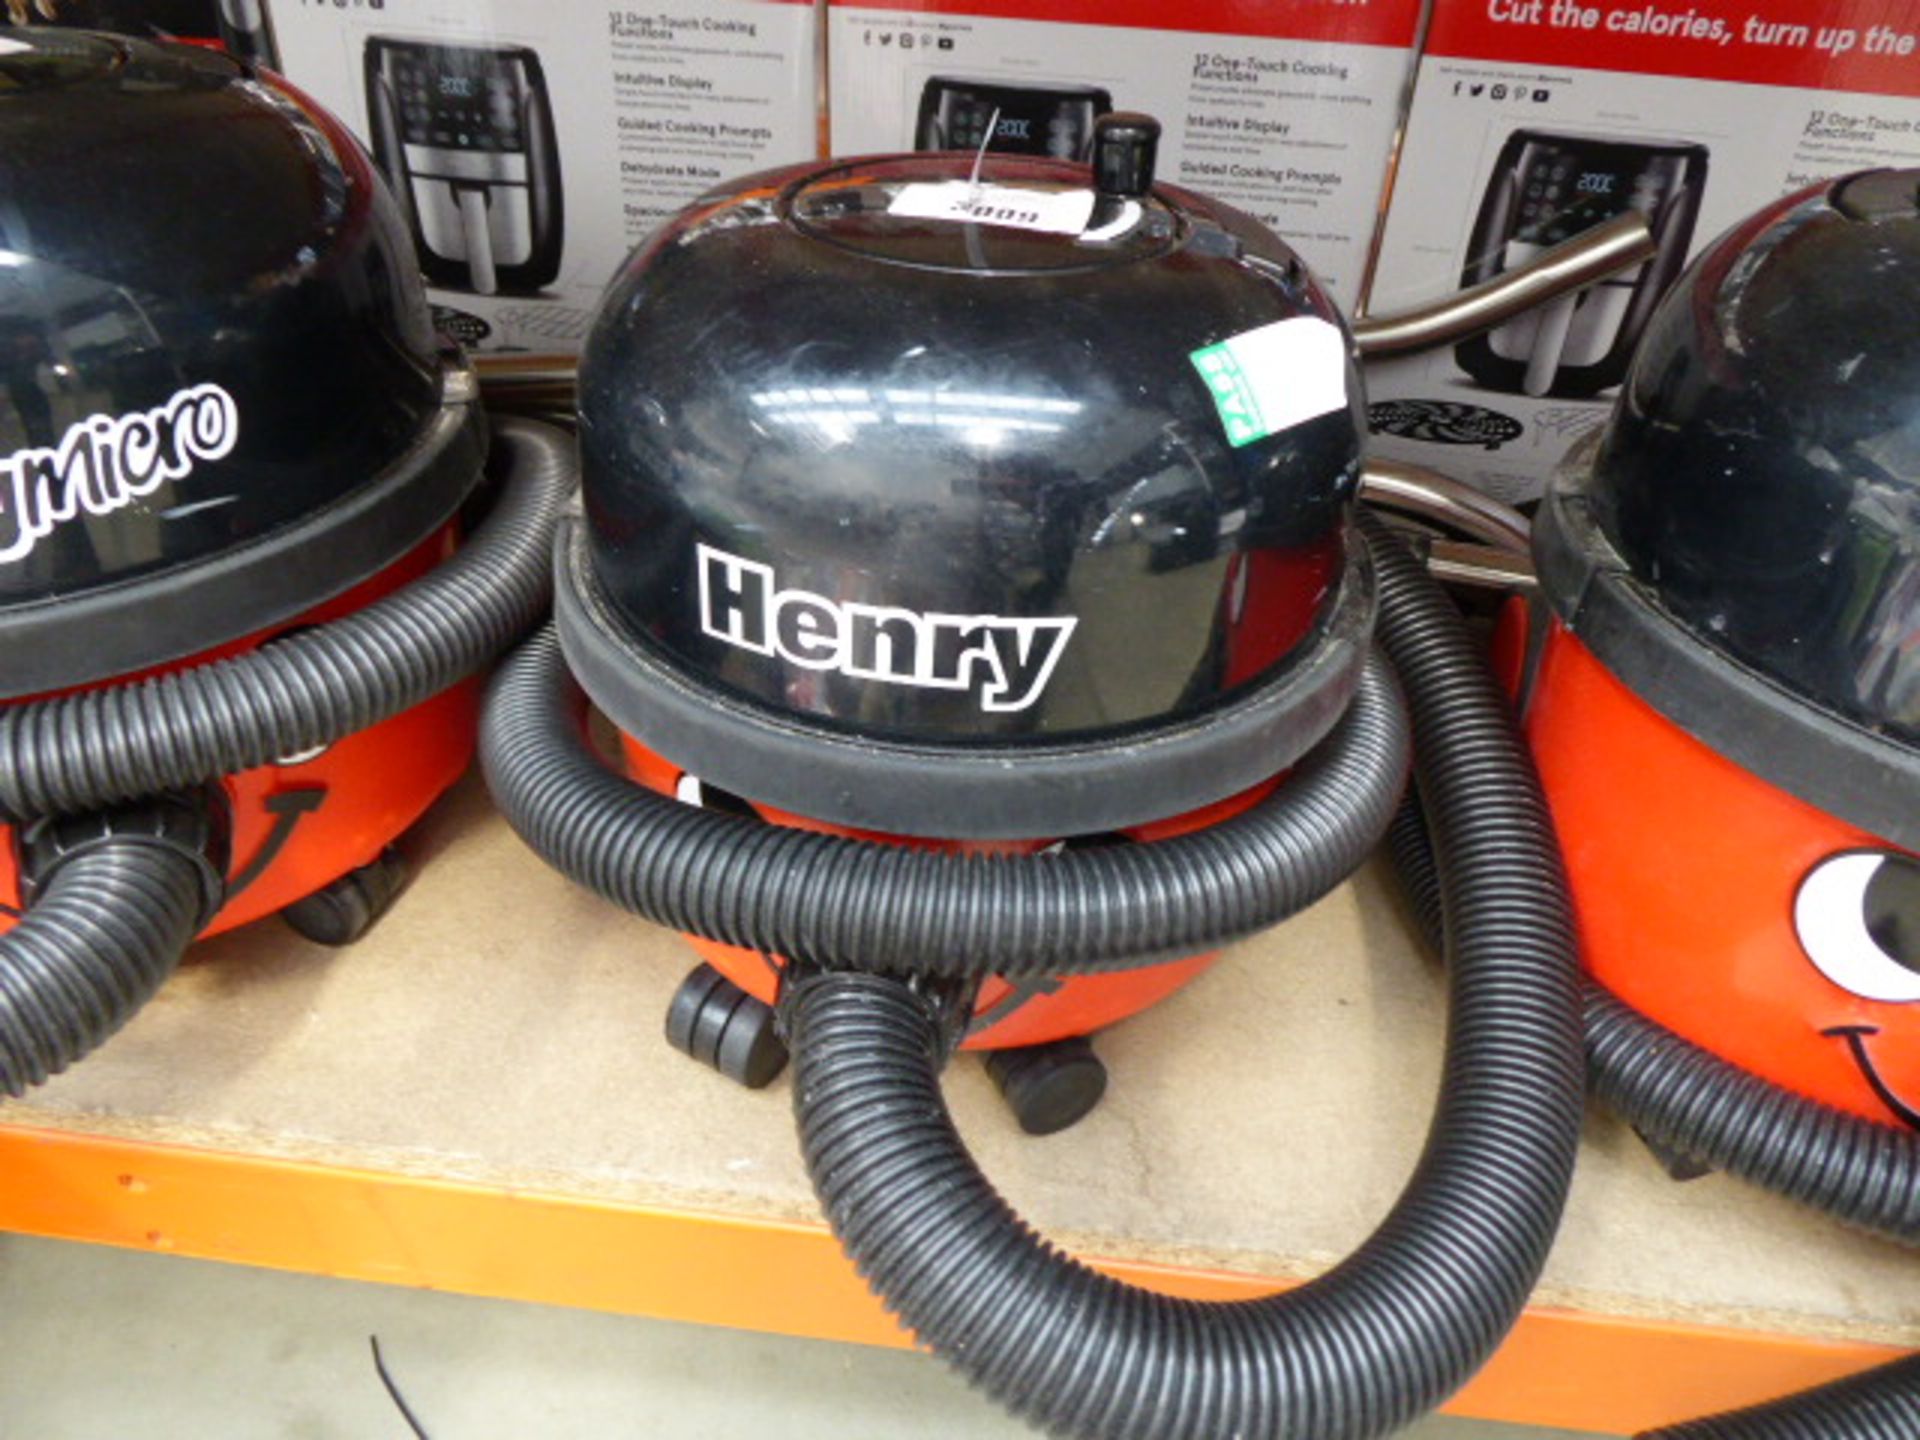 3009 - Henry micro vacuum cleaner plus pole